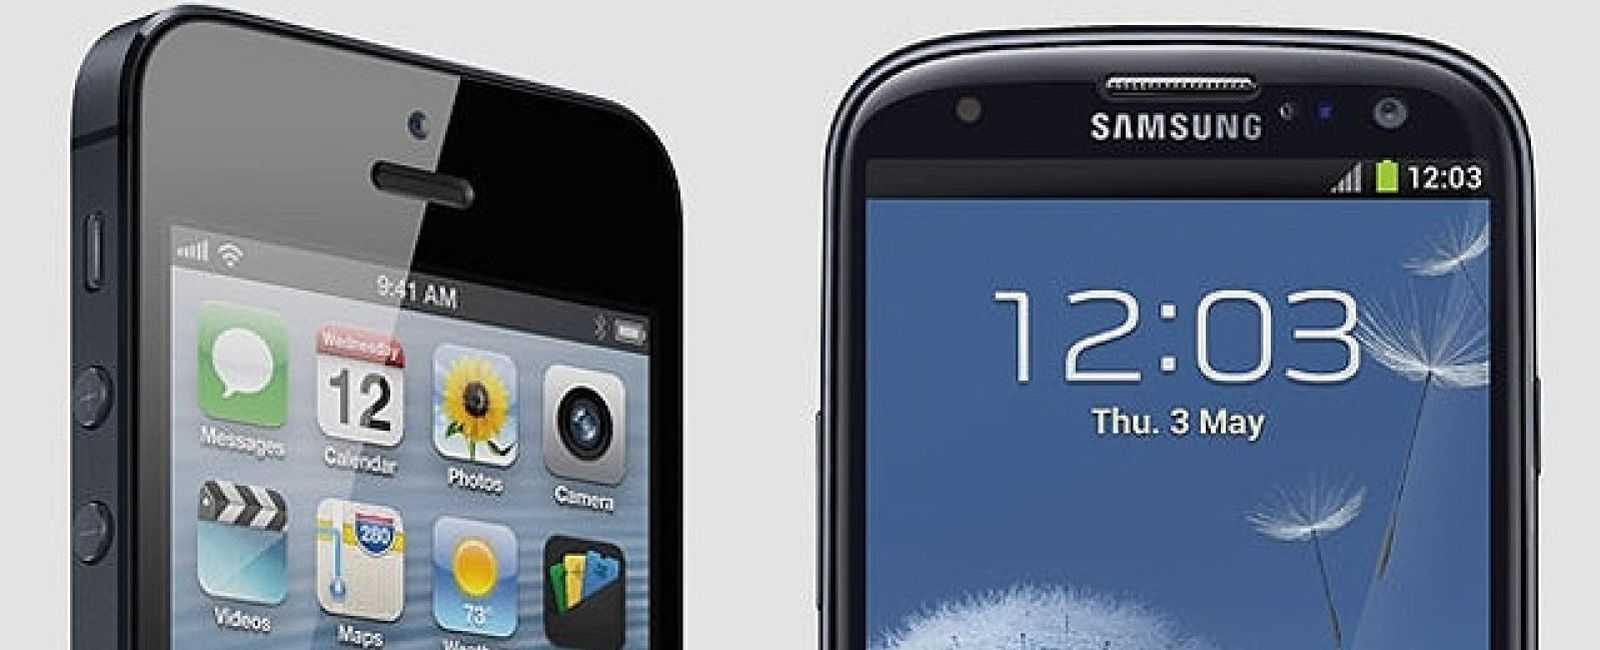 Foto: iPhone 5 o Galaxy S3: ¿cuál me compro?